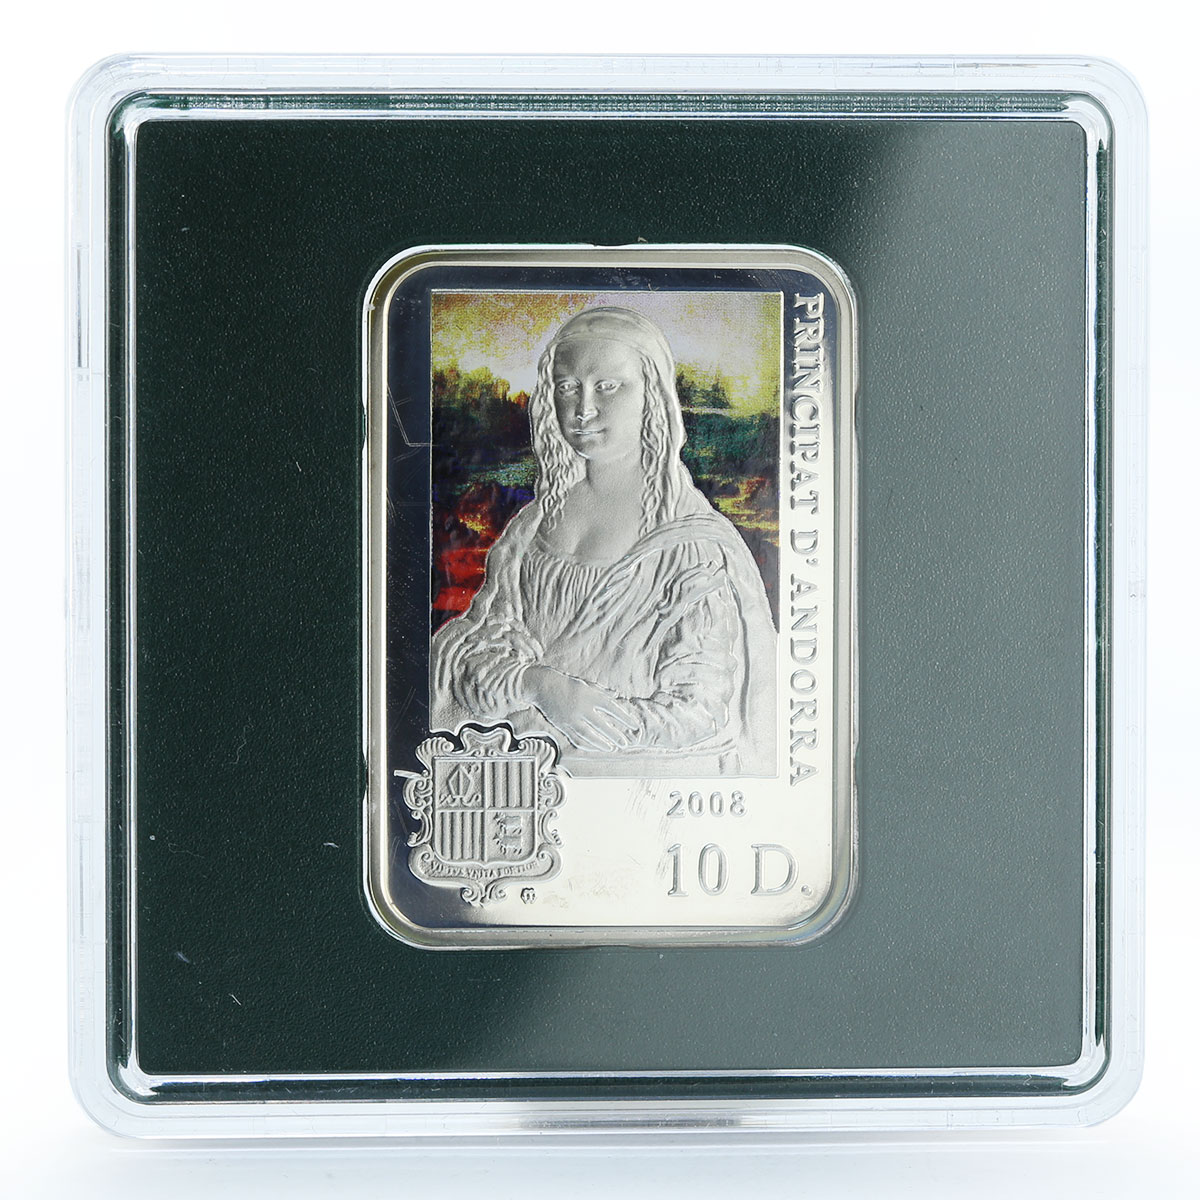 Andorra, 10 dinars, Da Vinci, Mona Lisa, painting, silver coin, 2008